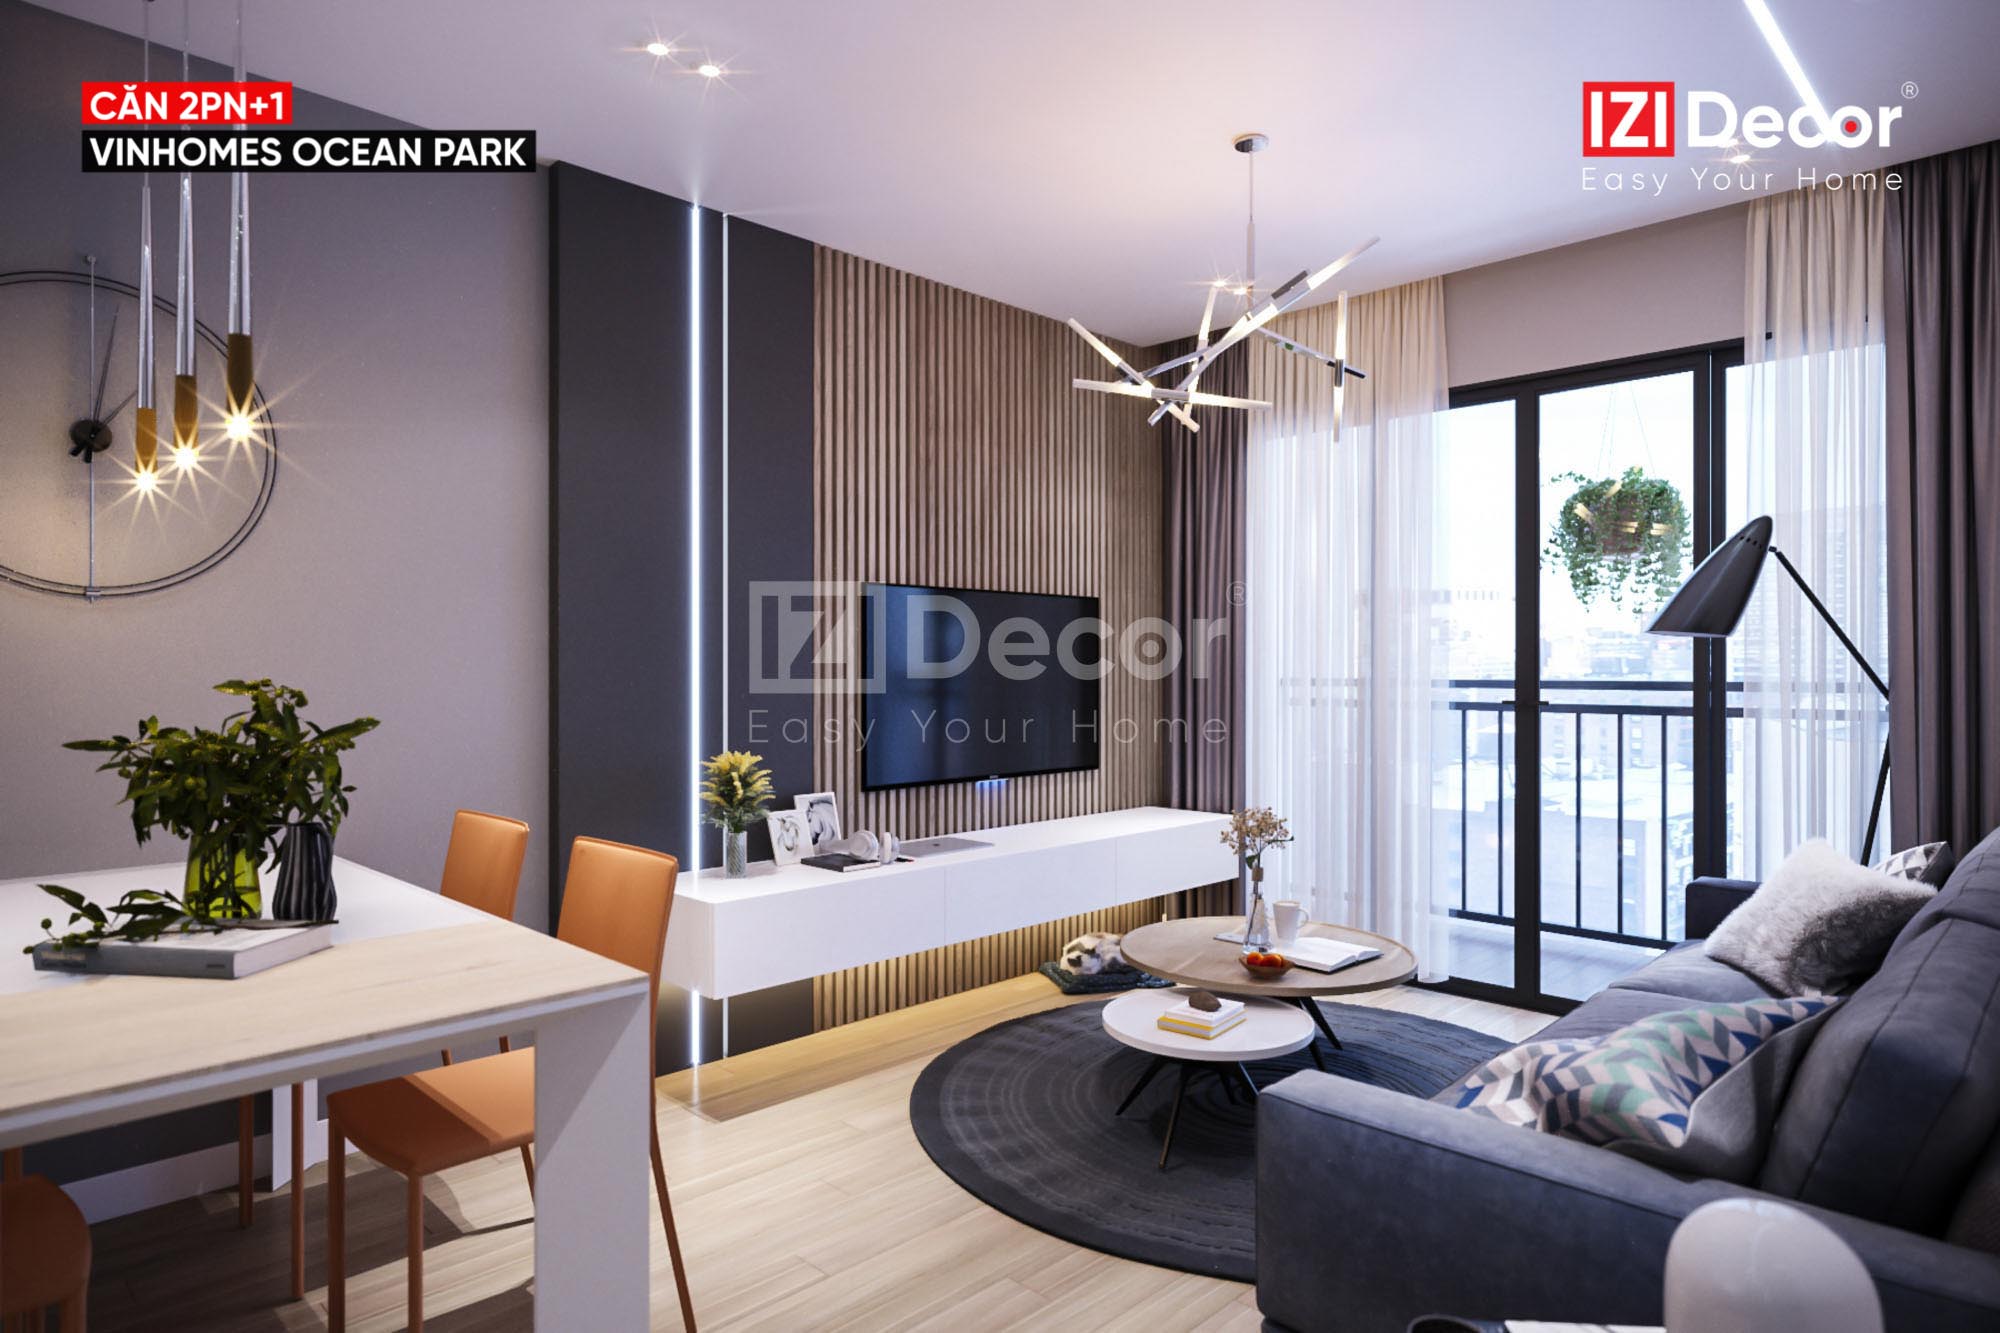 Thiết kế nội thất căn hộ 2pn+1+1wc Vinhomes Ocean Park | IZIDecor